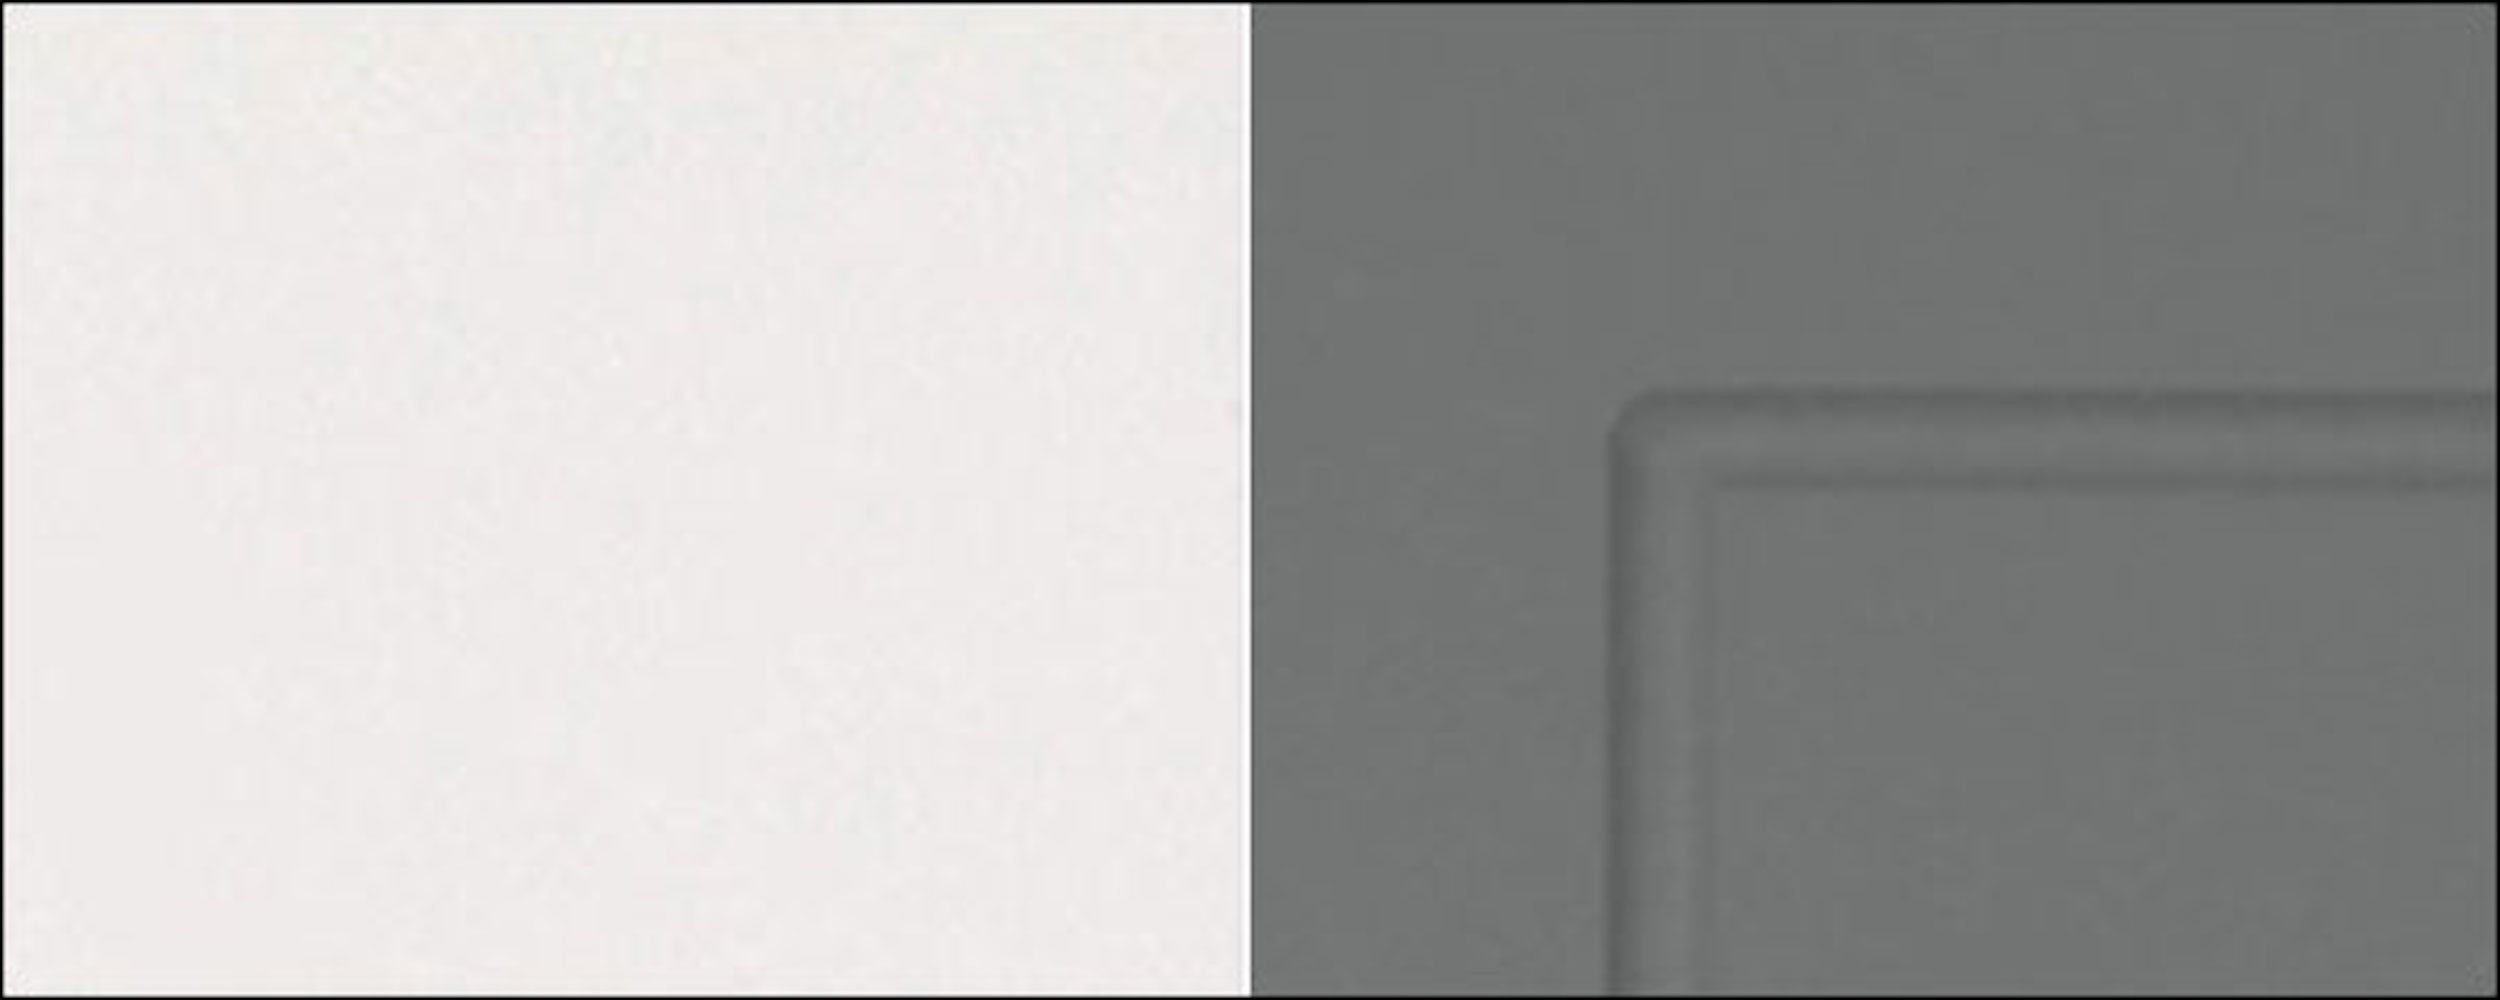 Kvantum und wählbar 2-türig Ausführung Eckschrank (Kvantum) Feldmann-Wohnen grey Korpusfarbe dust Front-, matt 84cm